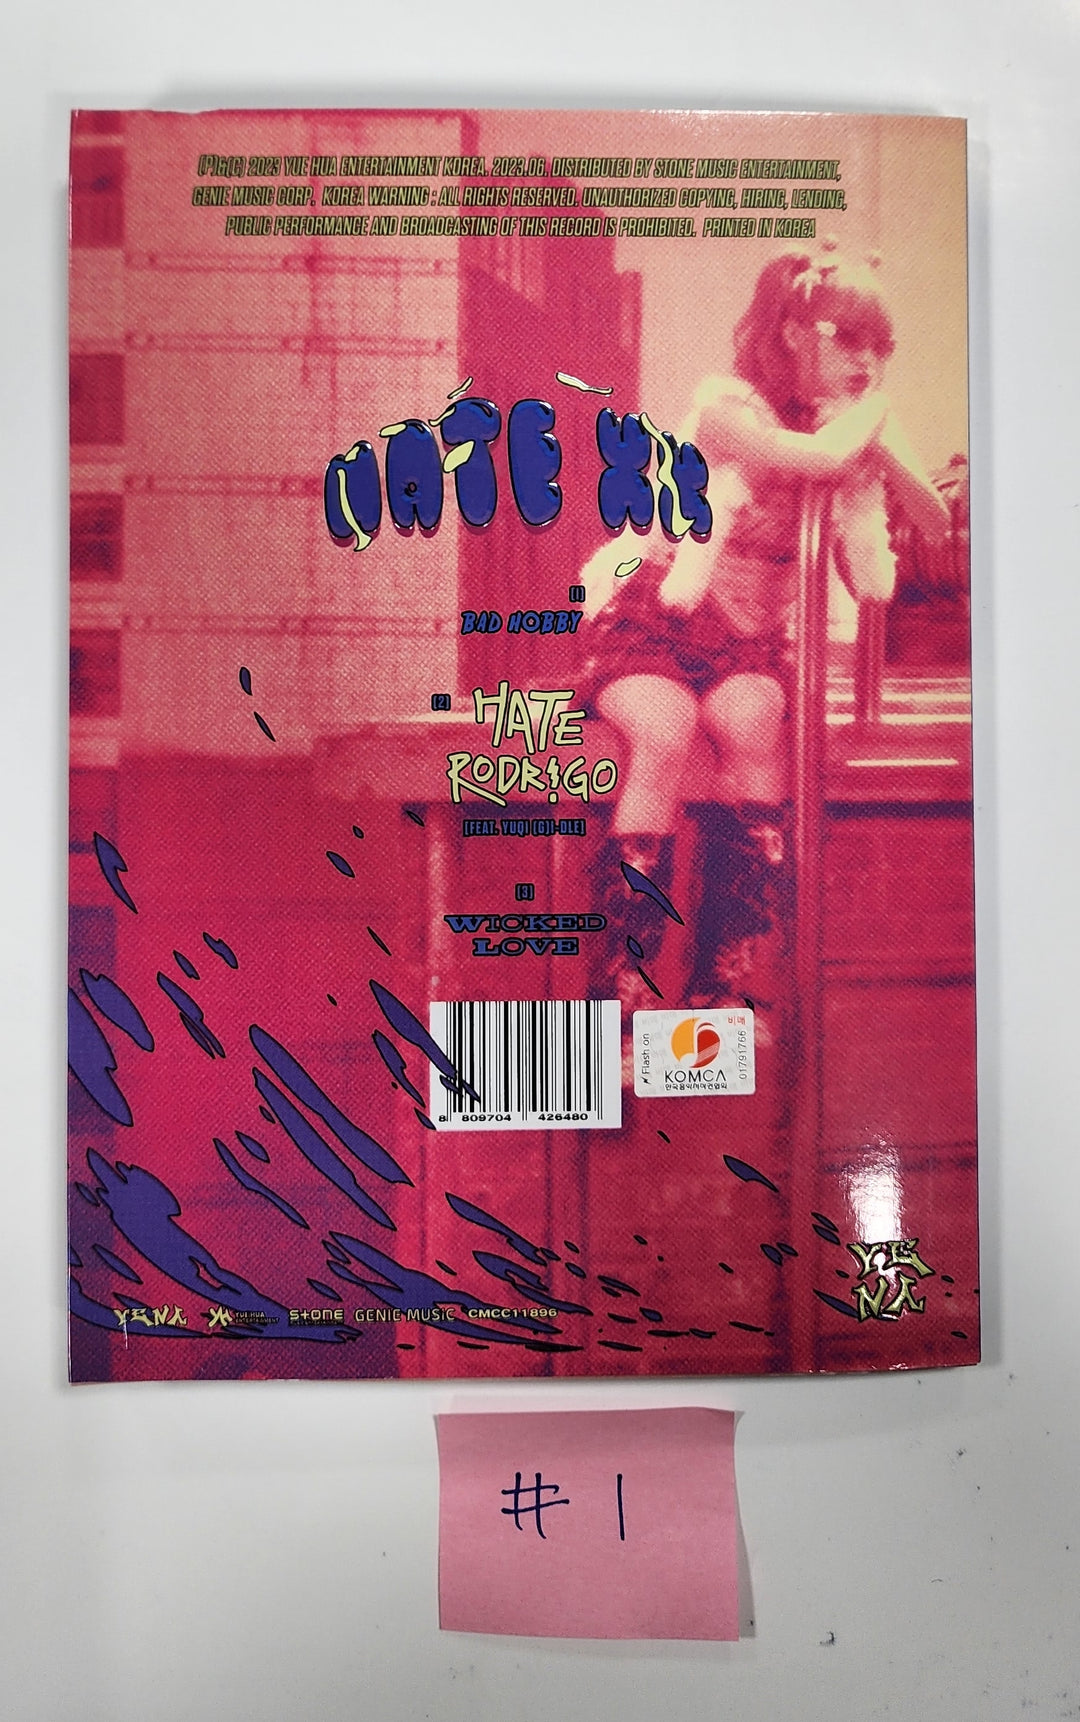 Yena "HATE XX" - Hand Autographed(Signed) Promo Album